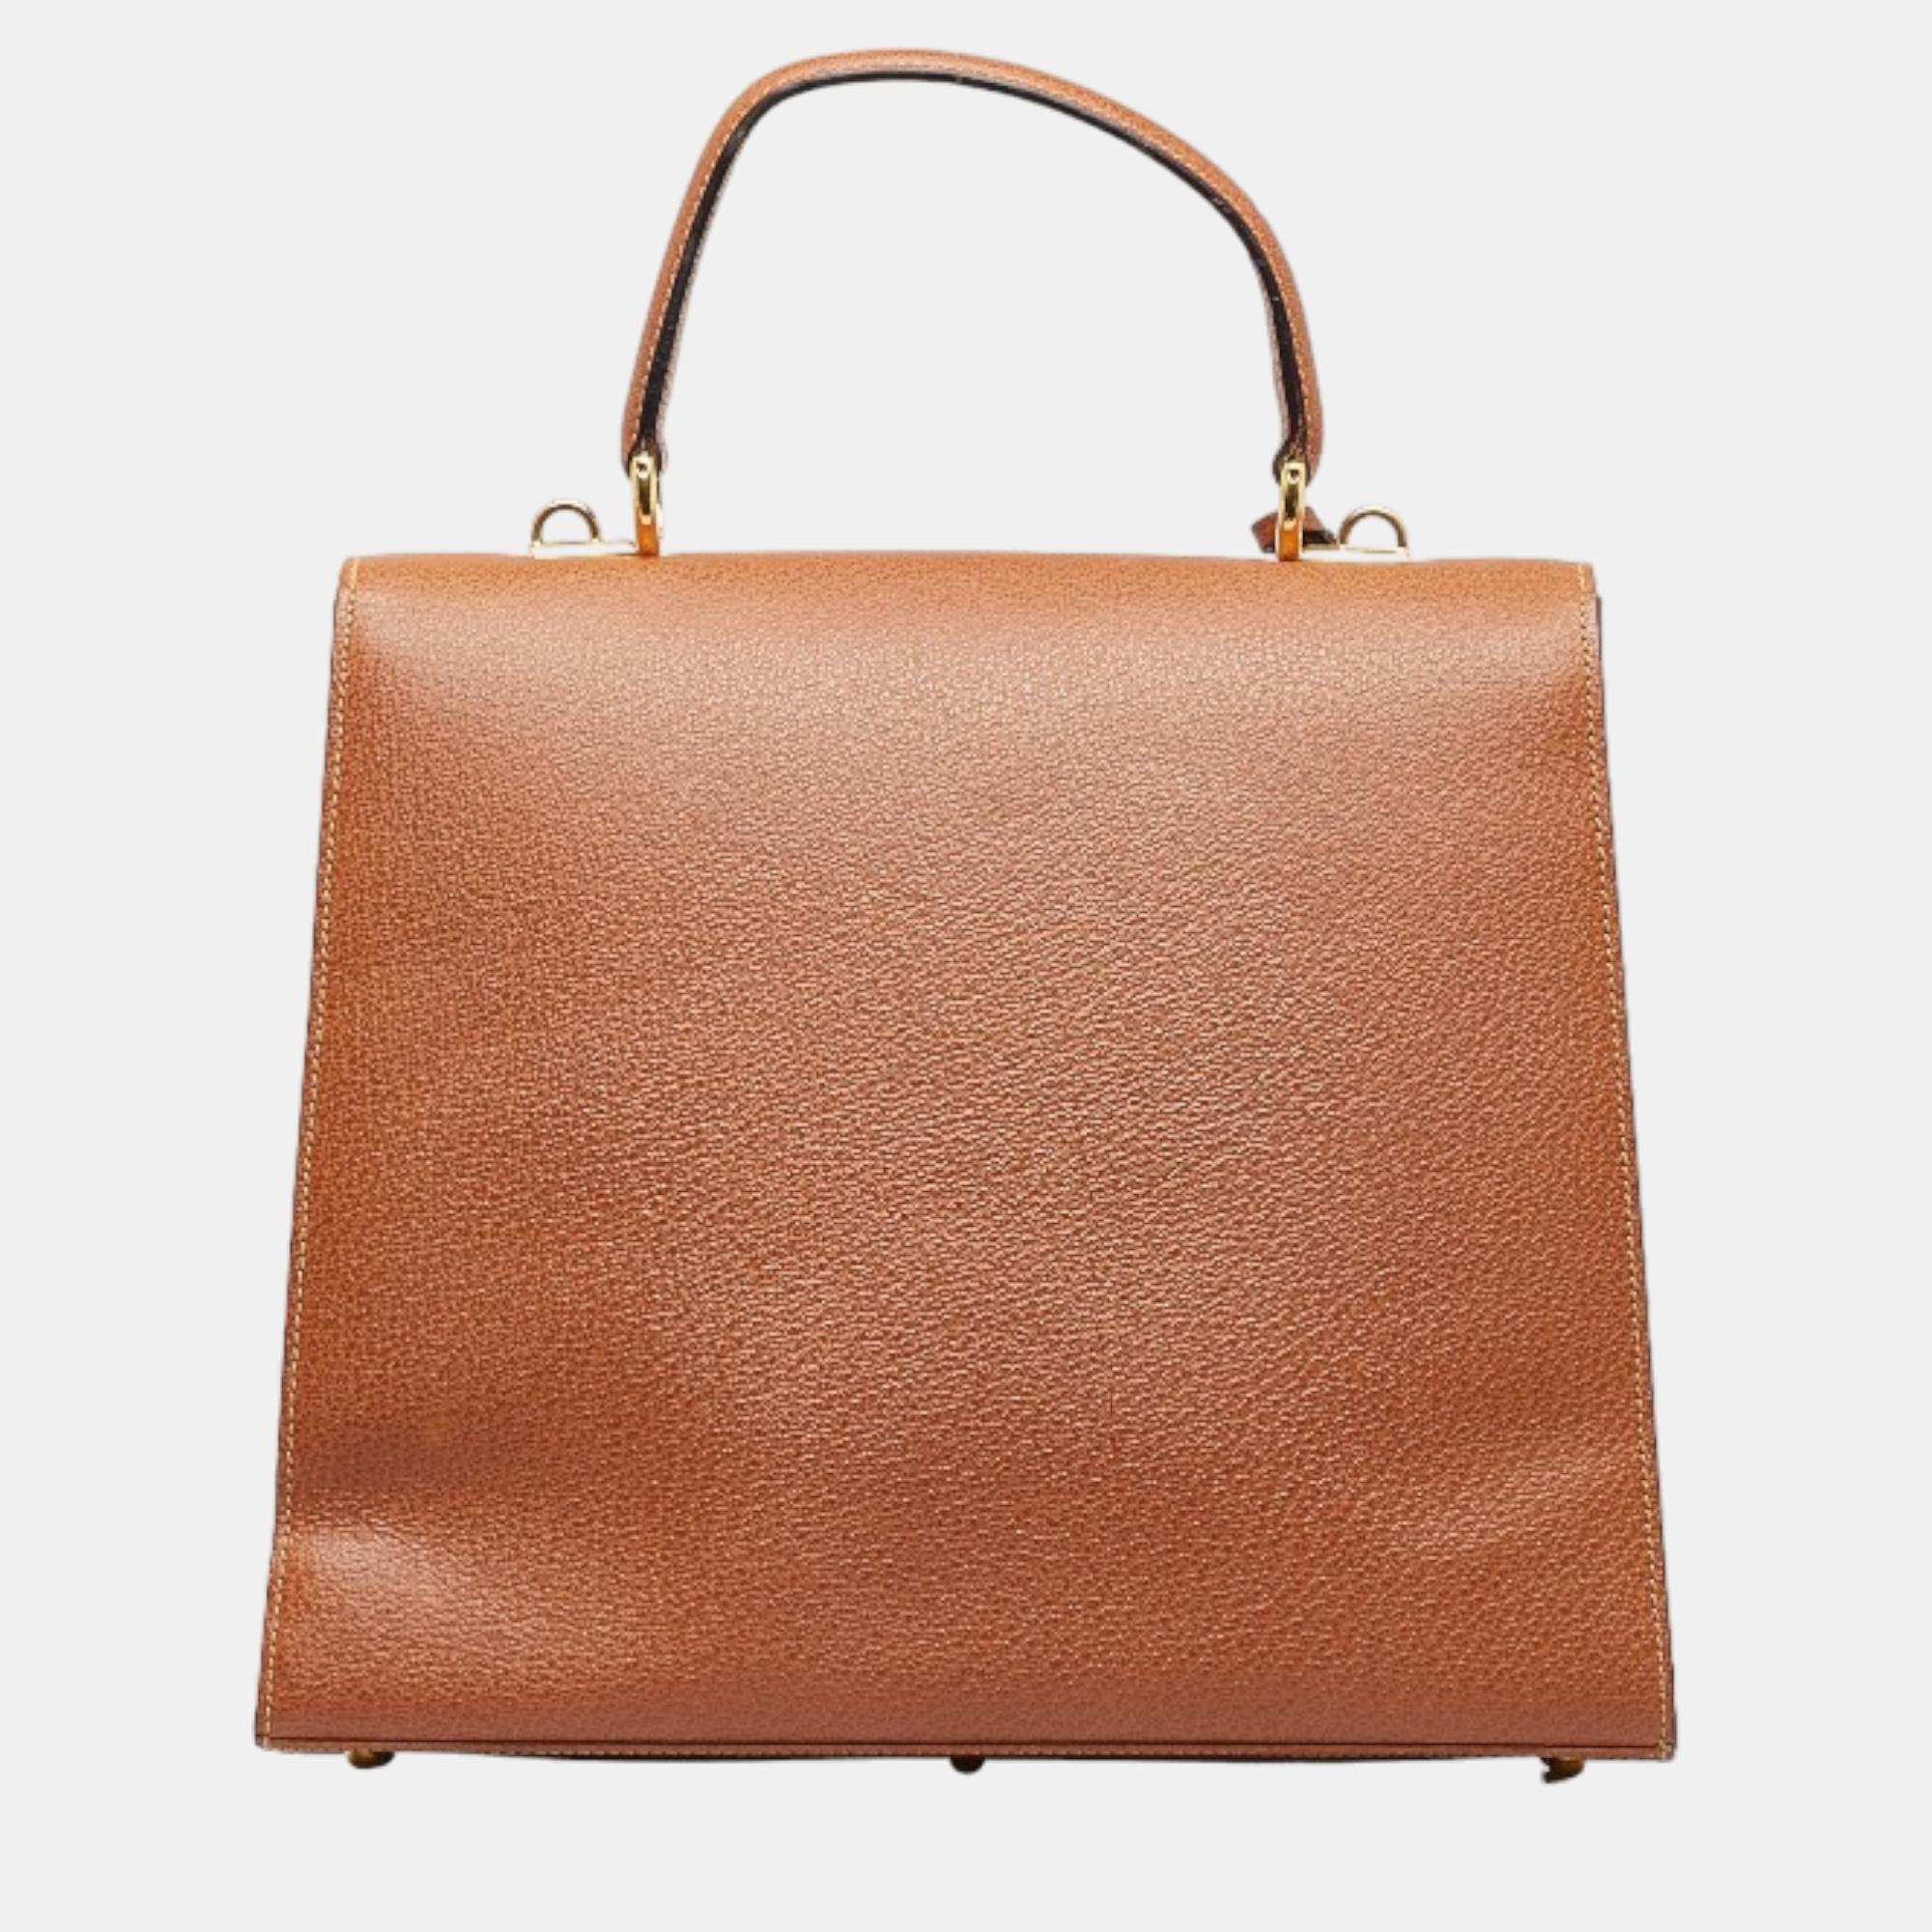 Gucci Brown Lady Lock Leather Handbag